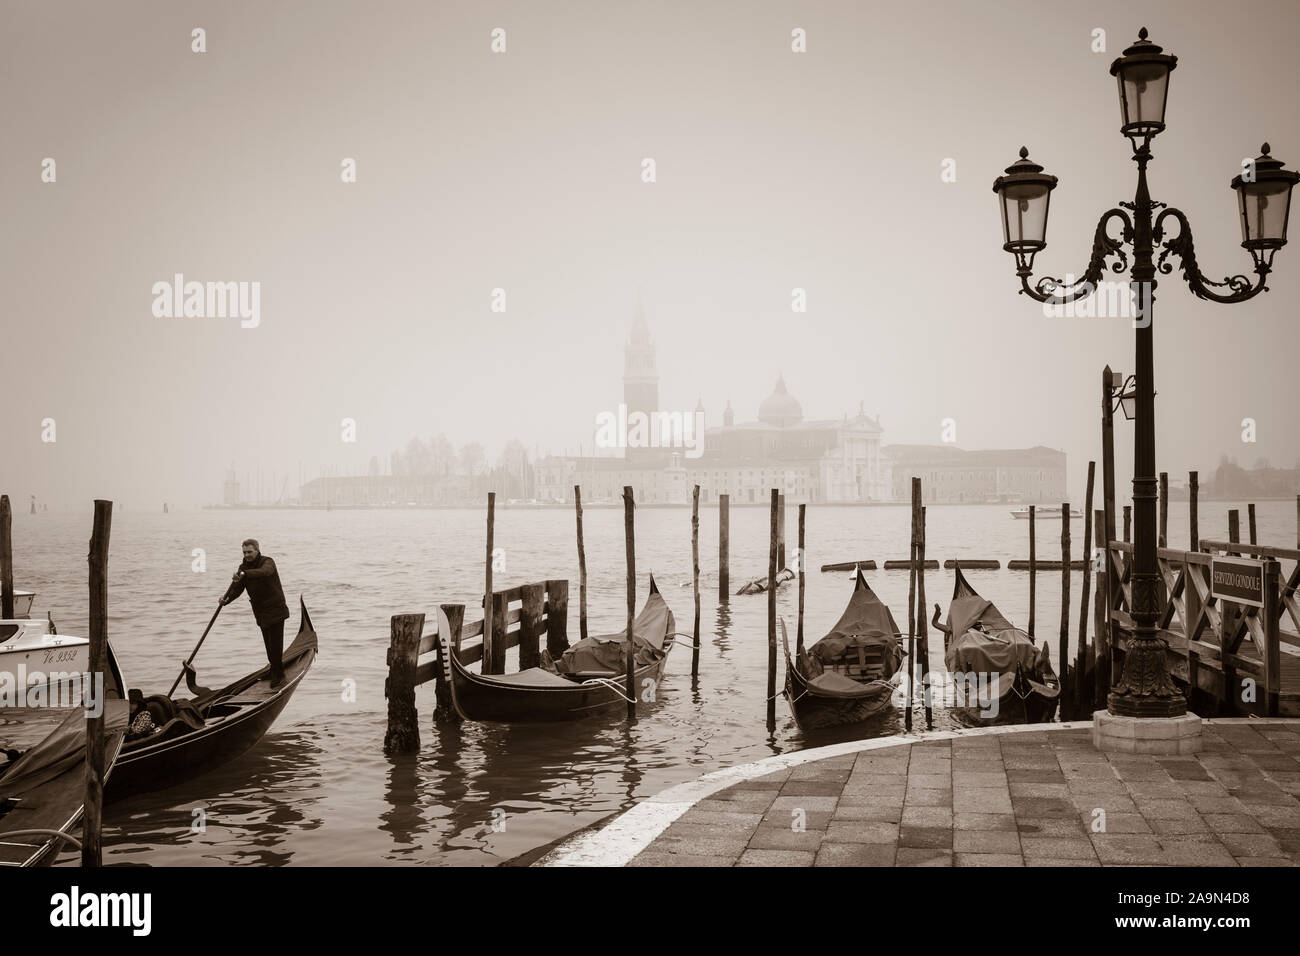 Venedig, Italien, bis 23. Dezember 2012. Venedig Gondola Szene im Winter mit Nebel auf der Lagune. Romantisch, Retro sepia getonten Bild Stockfoto